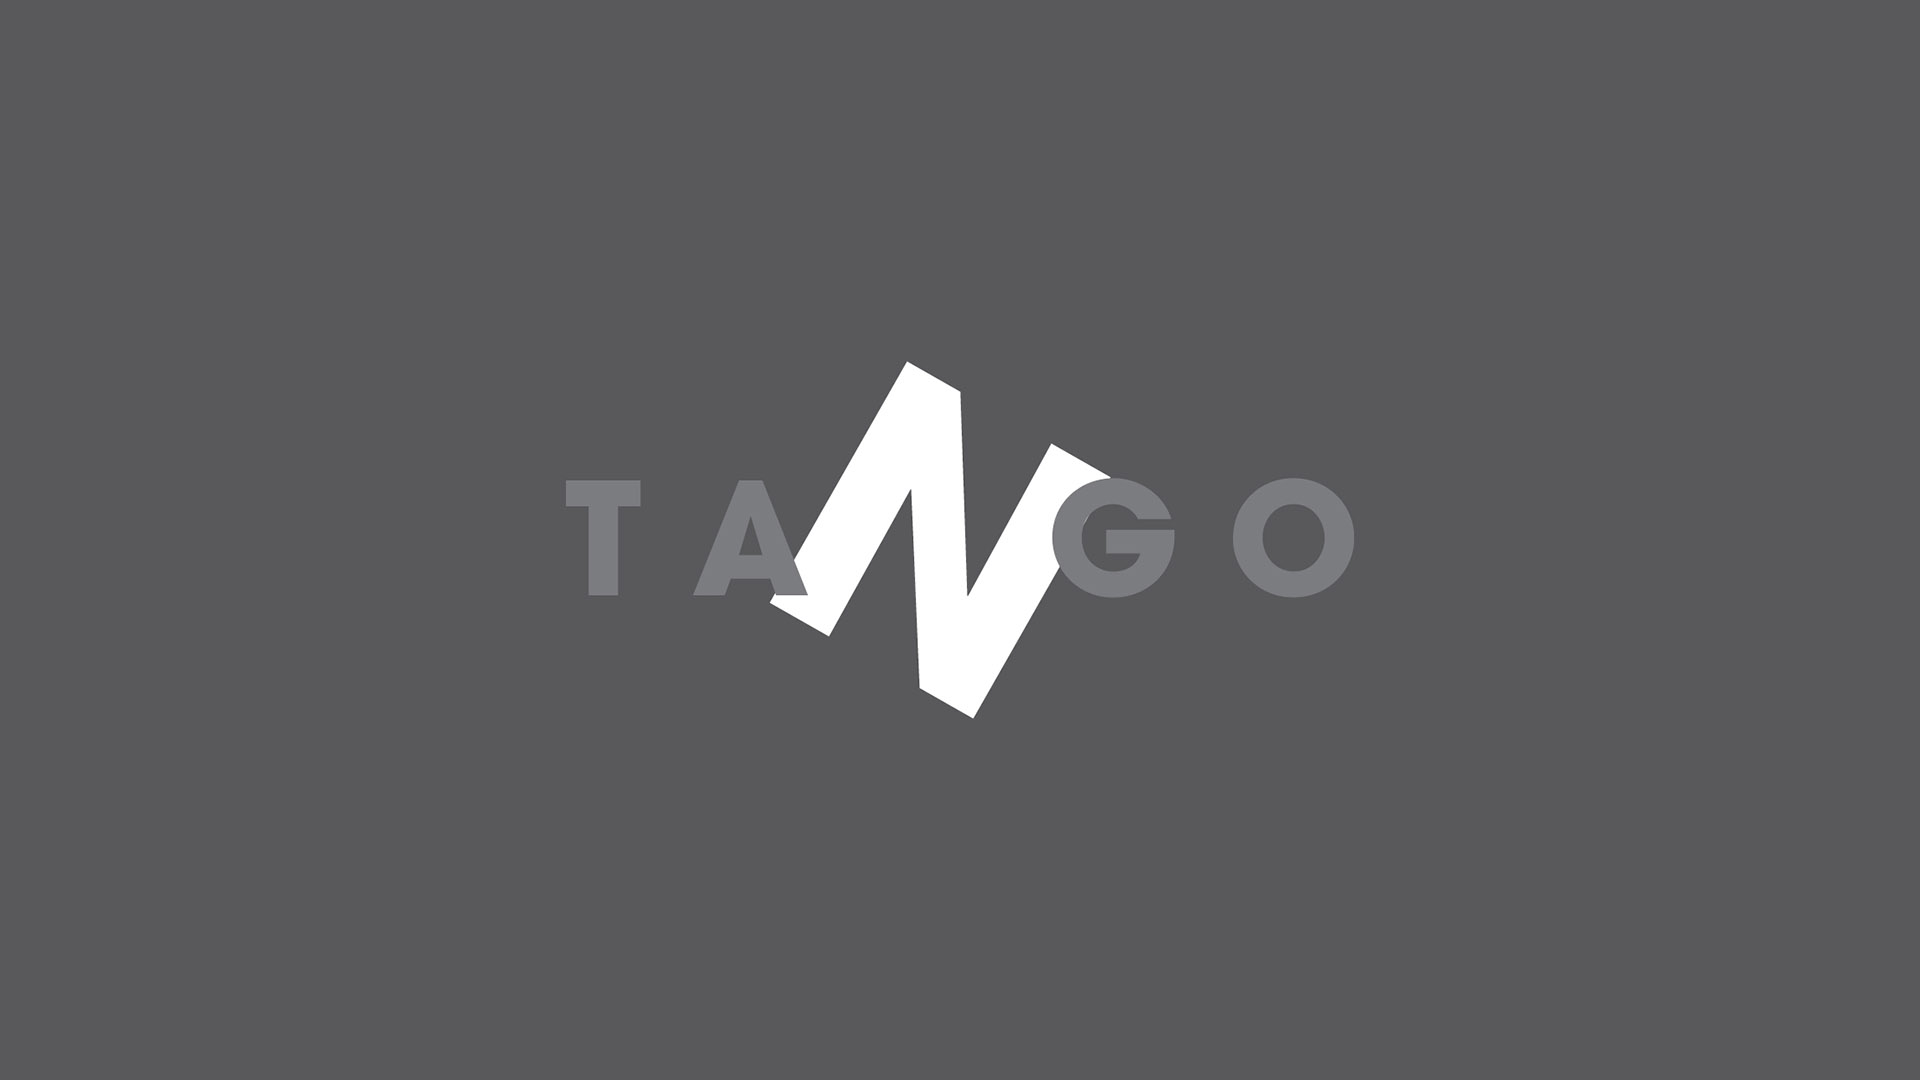 tango logo on gray background with white n